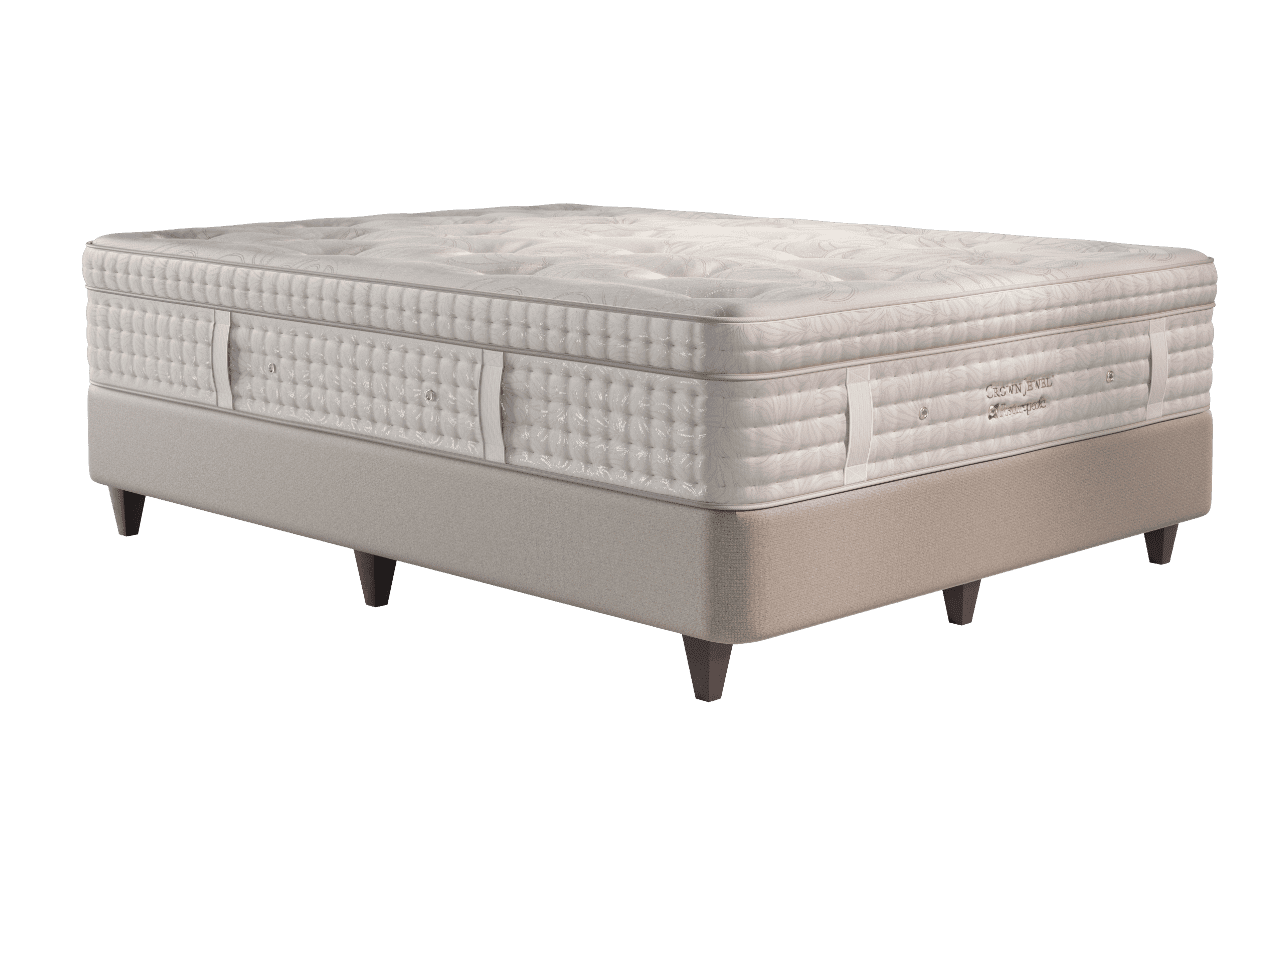 sealy crown jewel mattress price